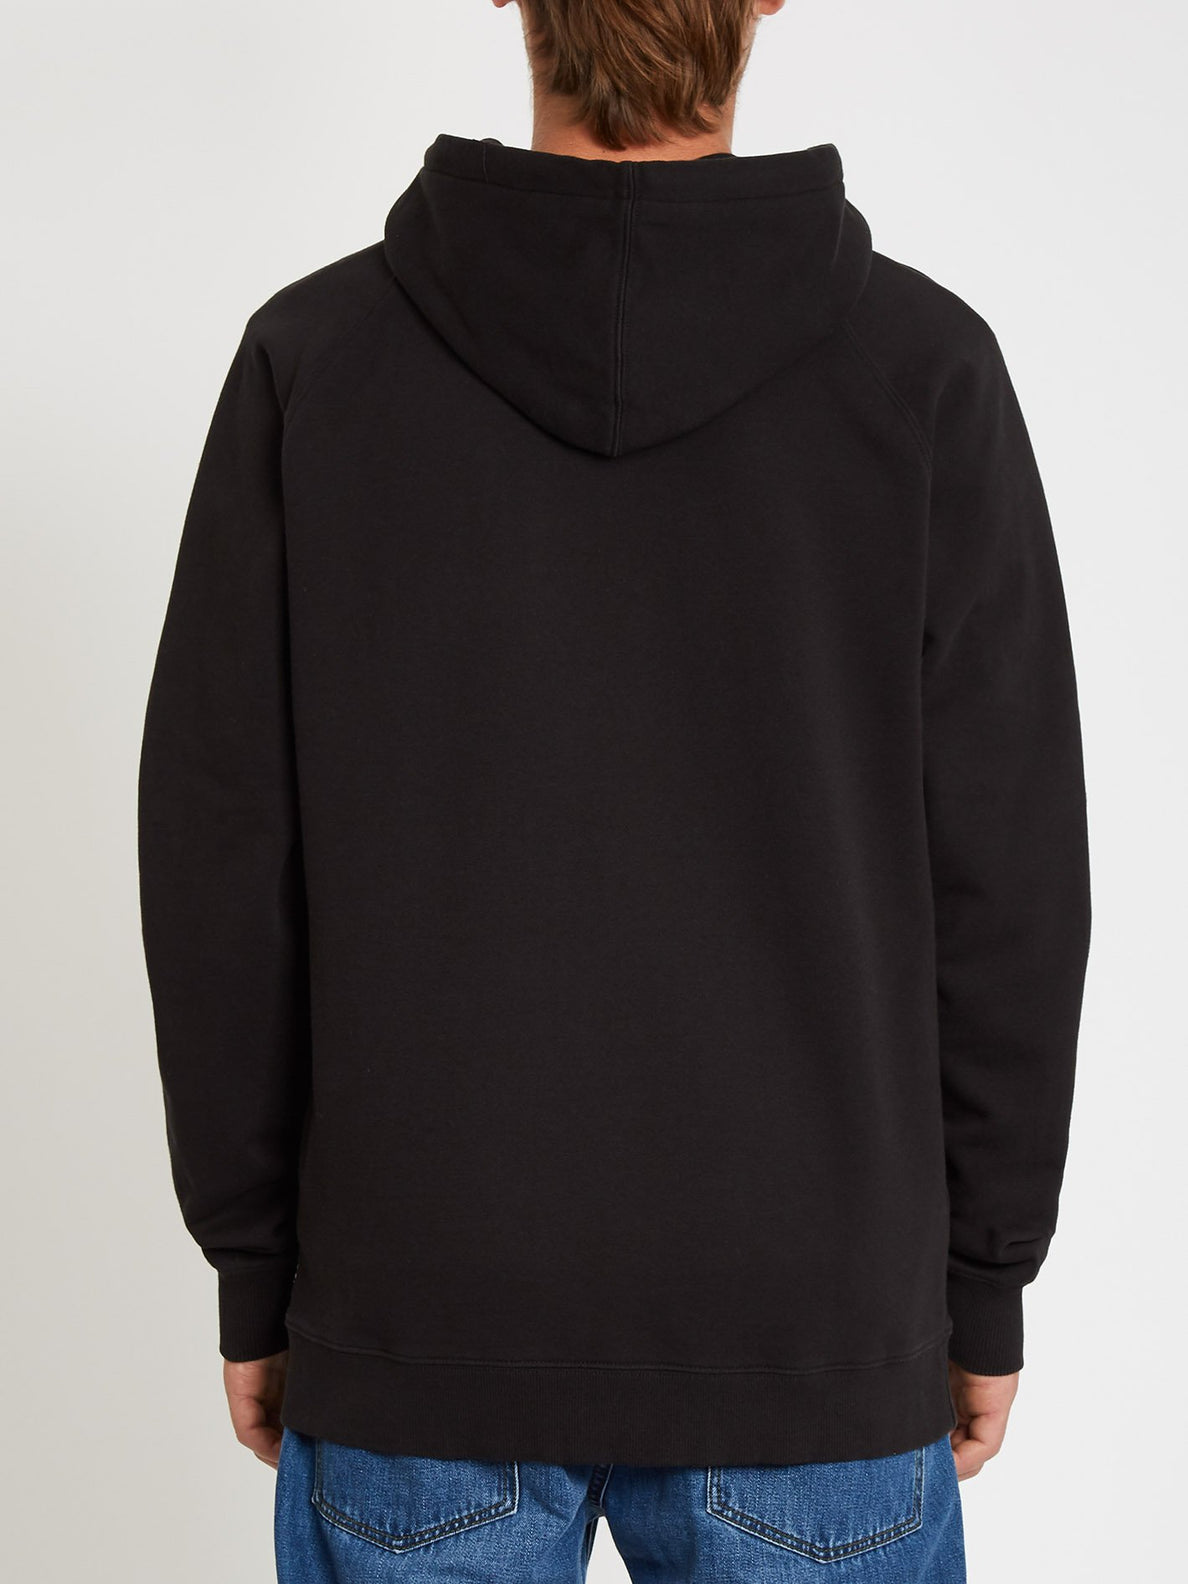 Freeleven Zip Sweatshirt - Black (A4812102_BLK) [B]